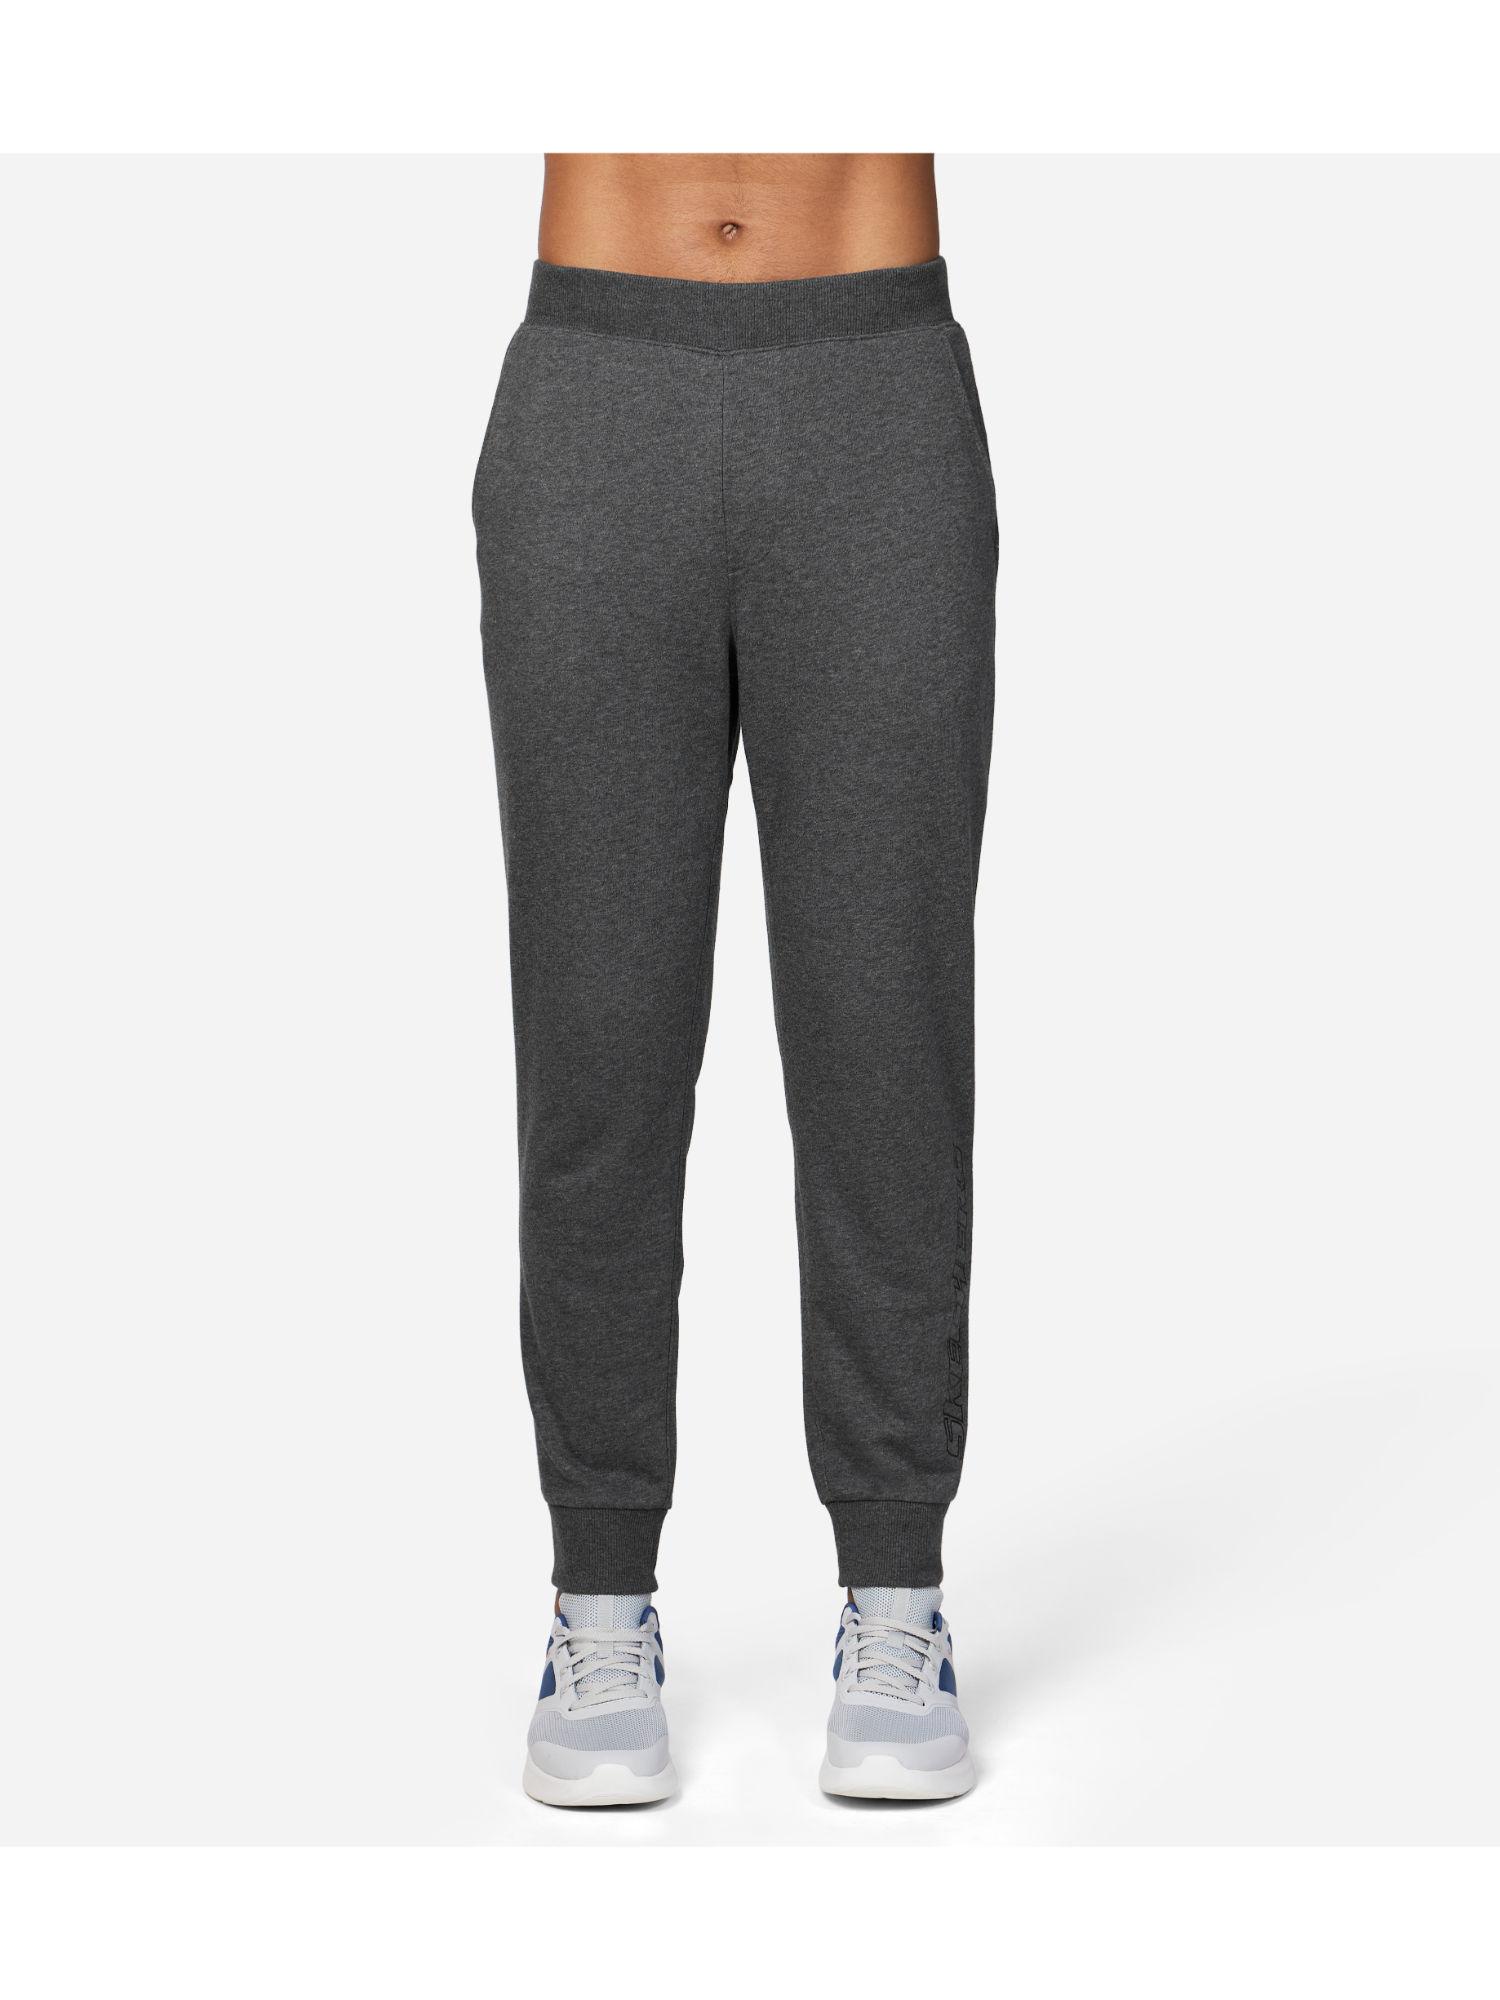 sweats logo jogger grey